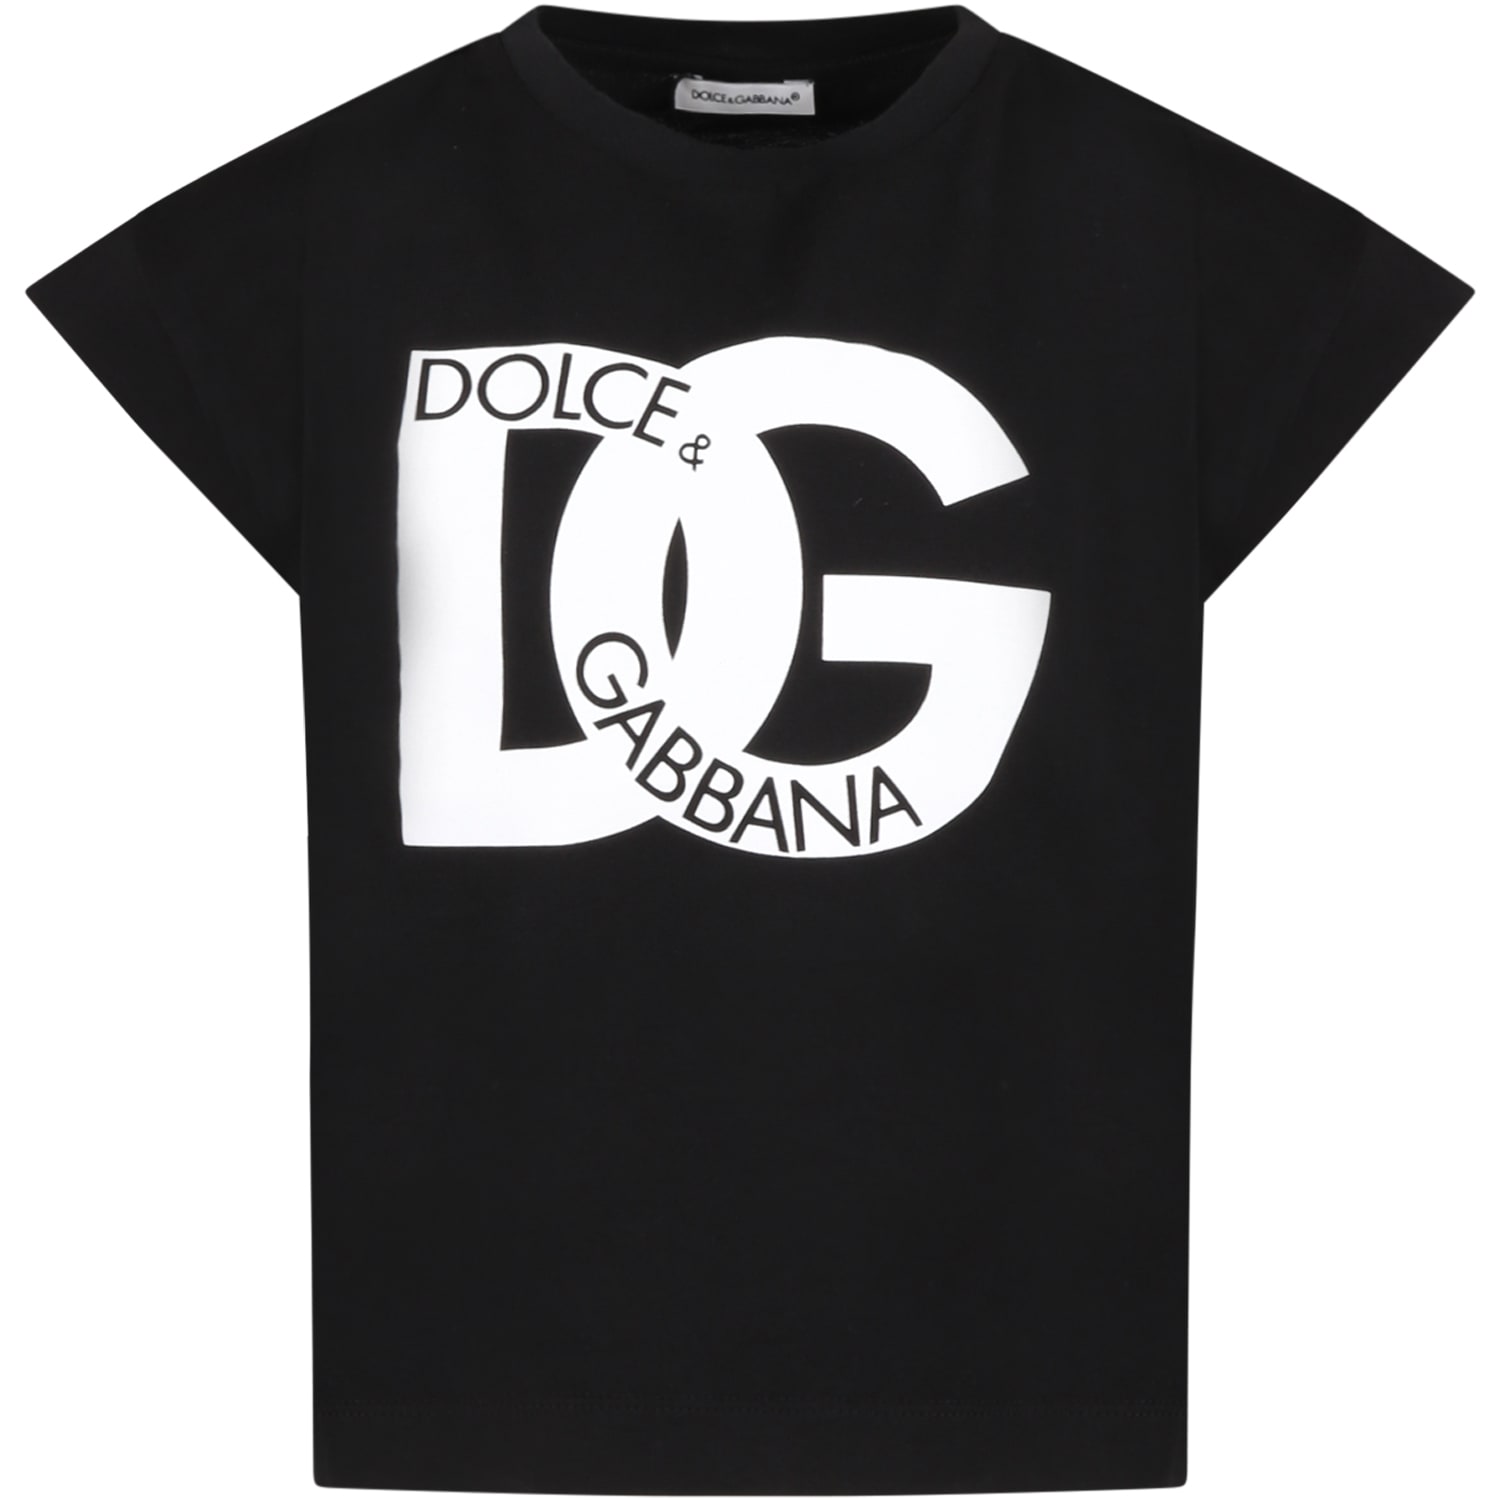 Dolce & Gabbana Black T-shirt For Girl With White Logo